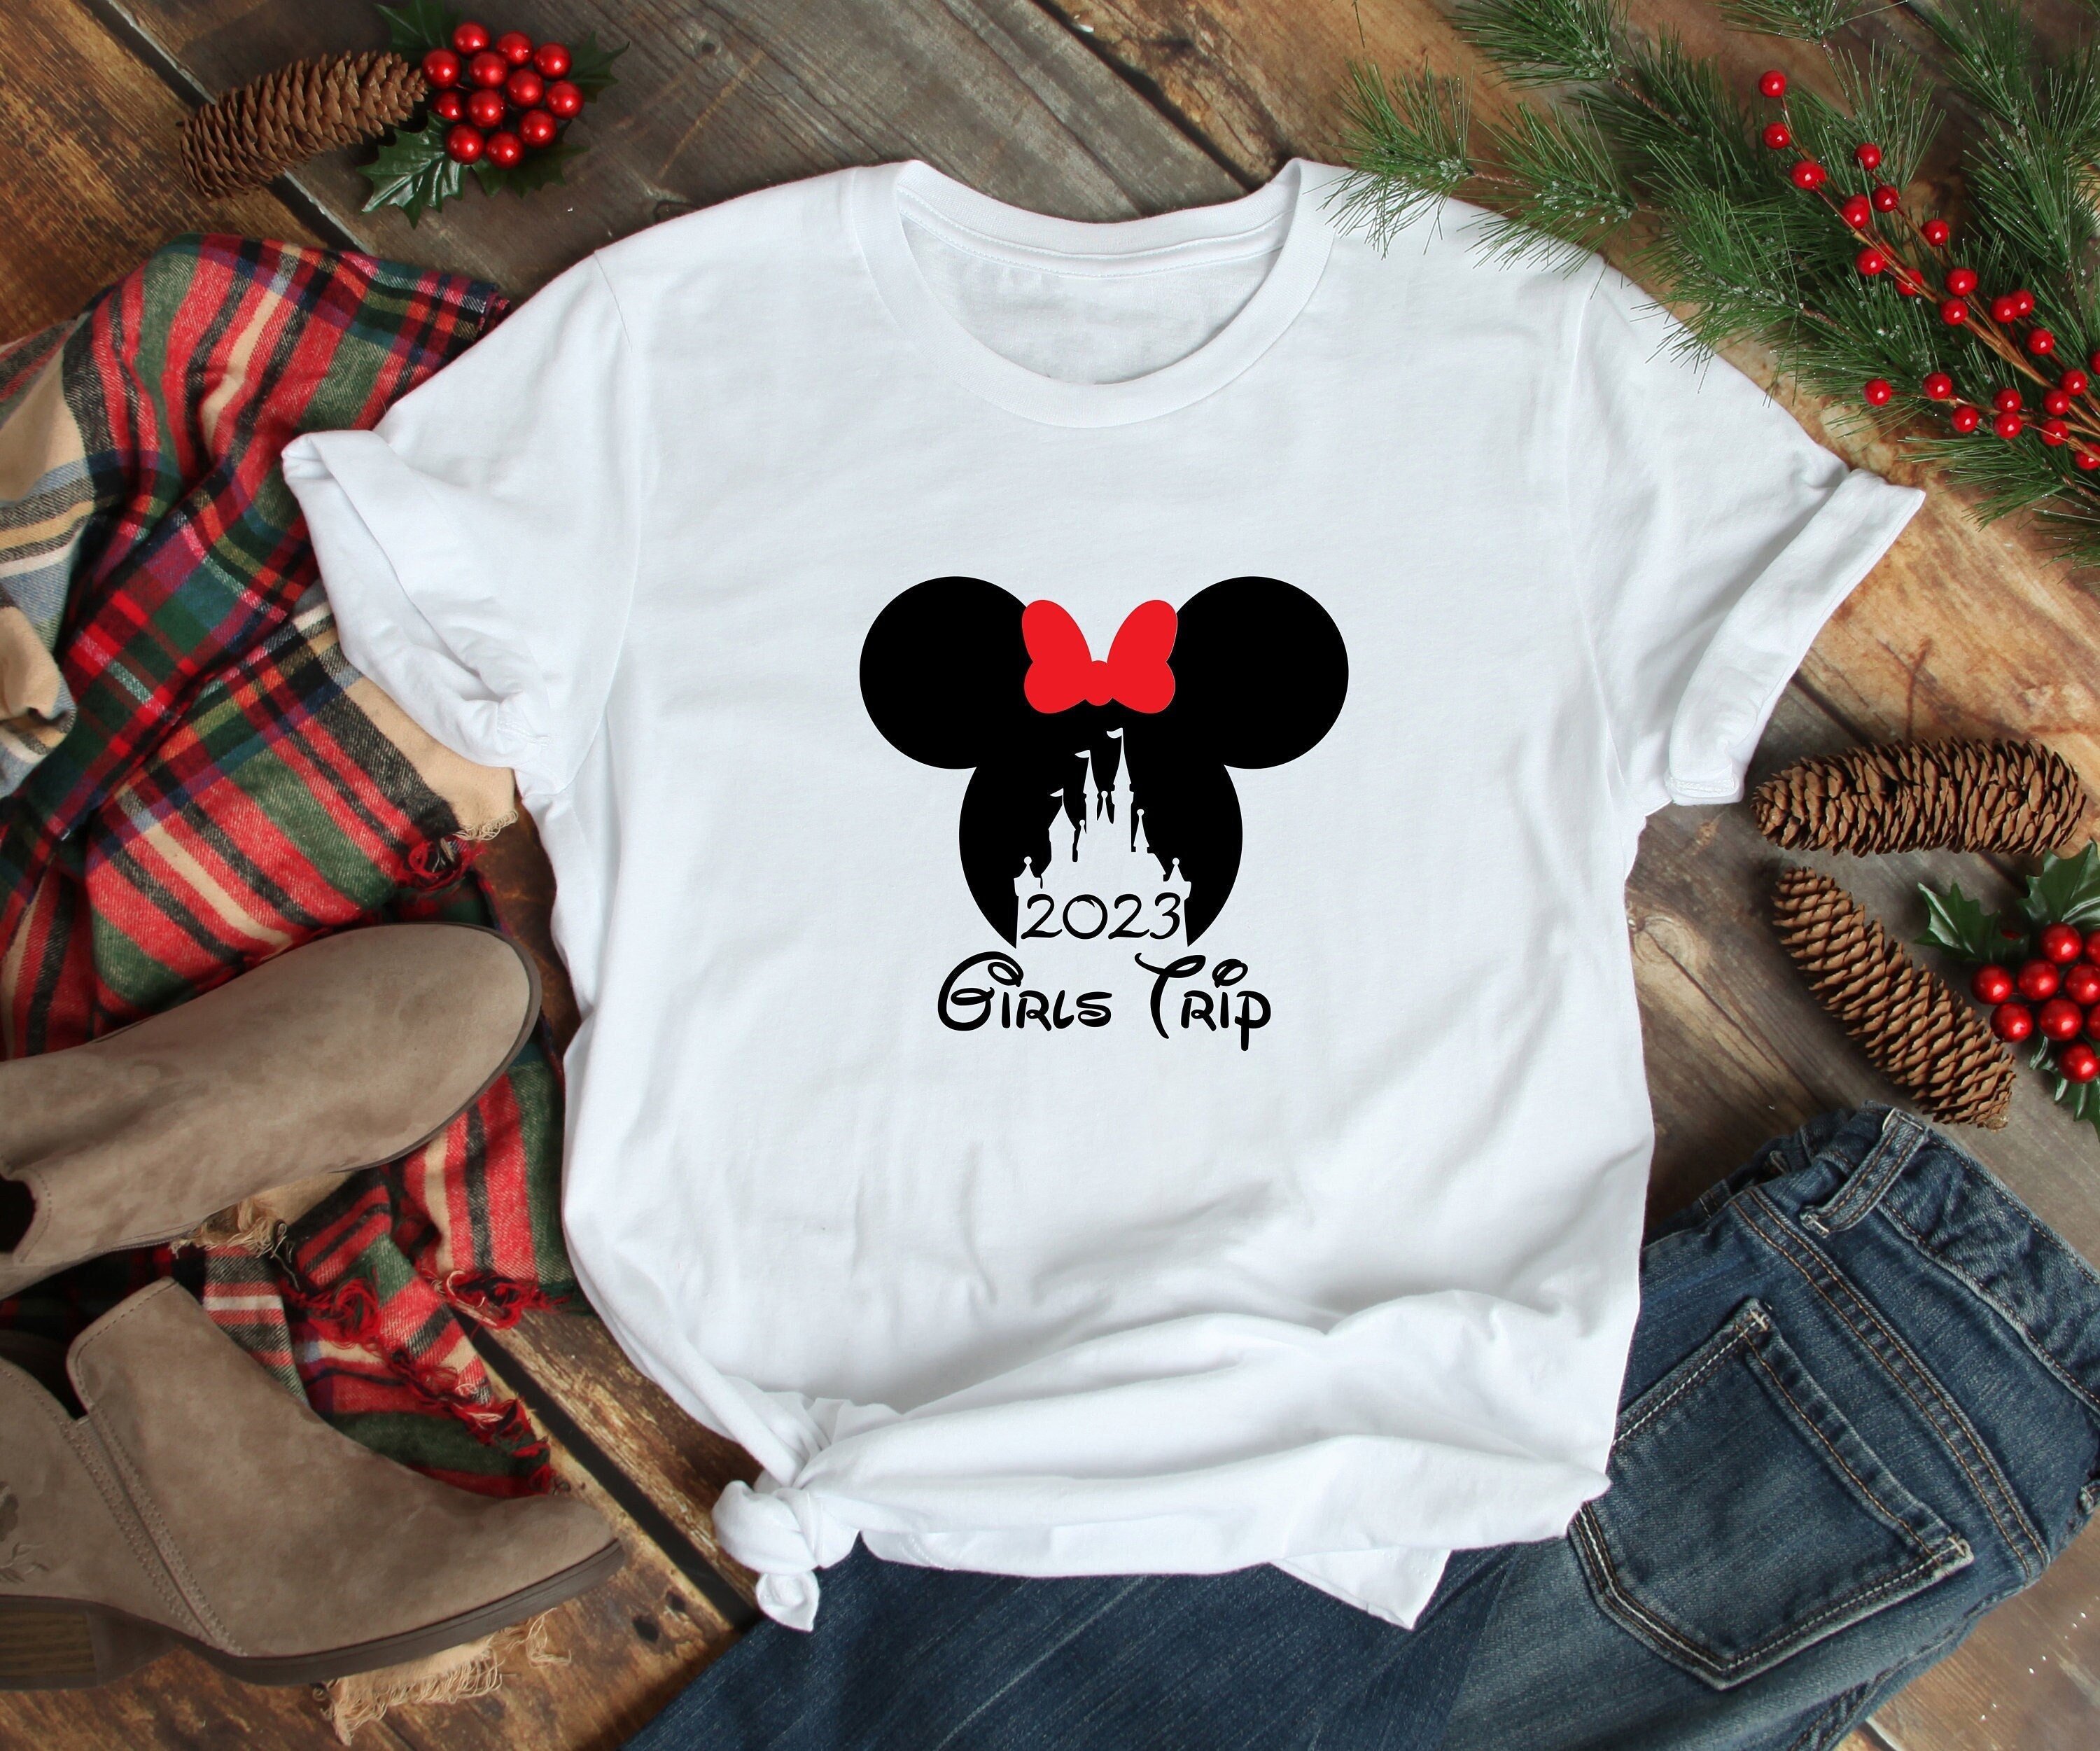 Discover Disney Girls Trip 2023 Shirt, Disney Minnie Shirt, Disney Shirt